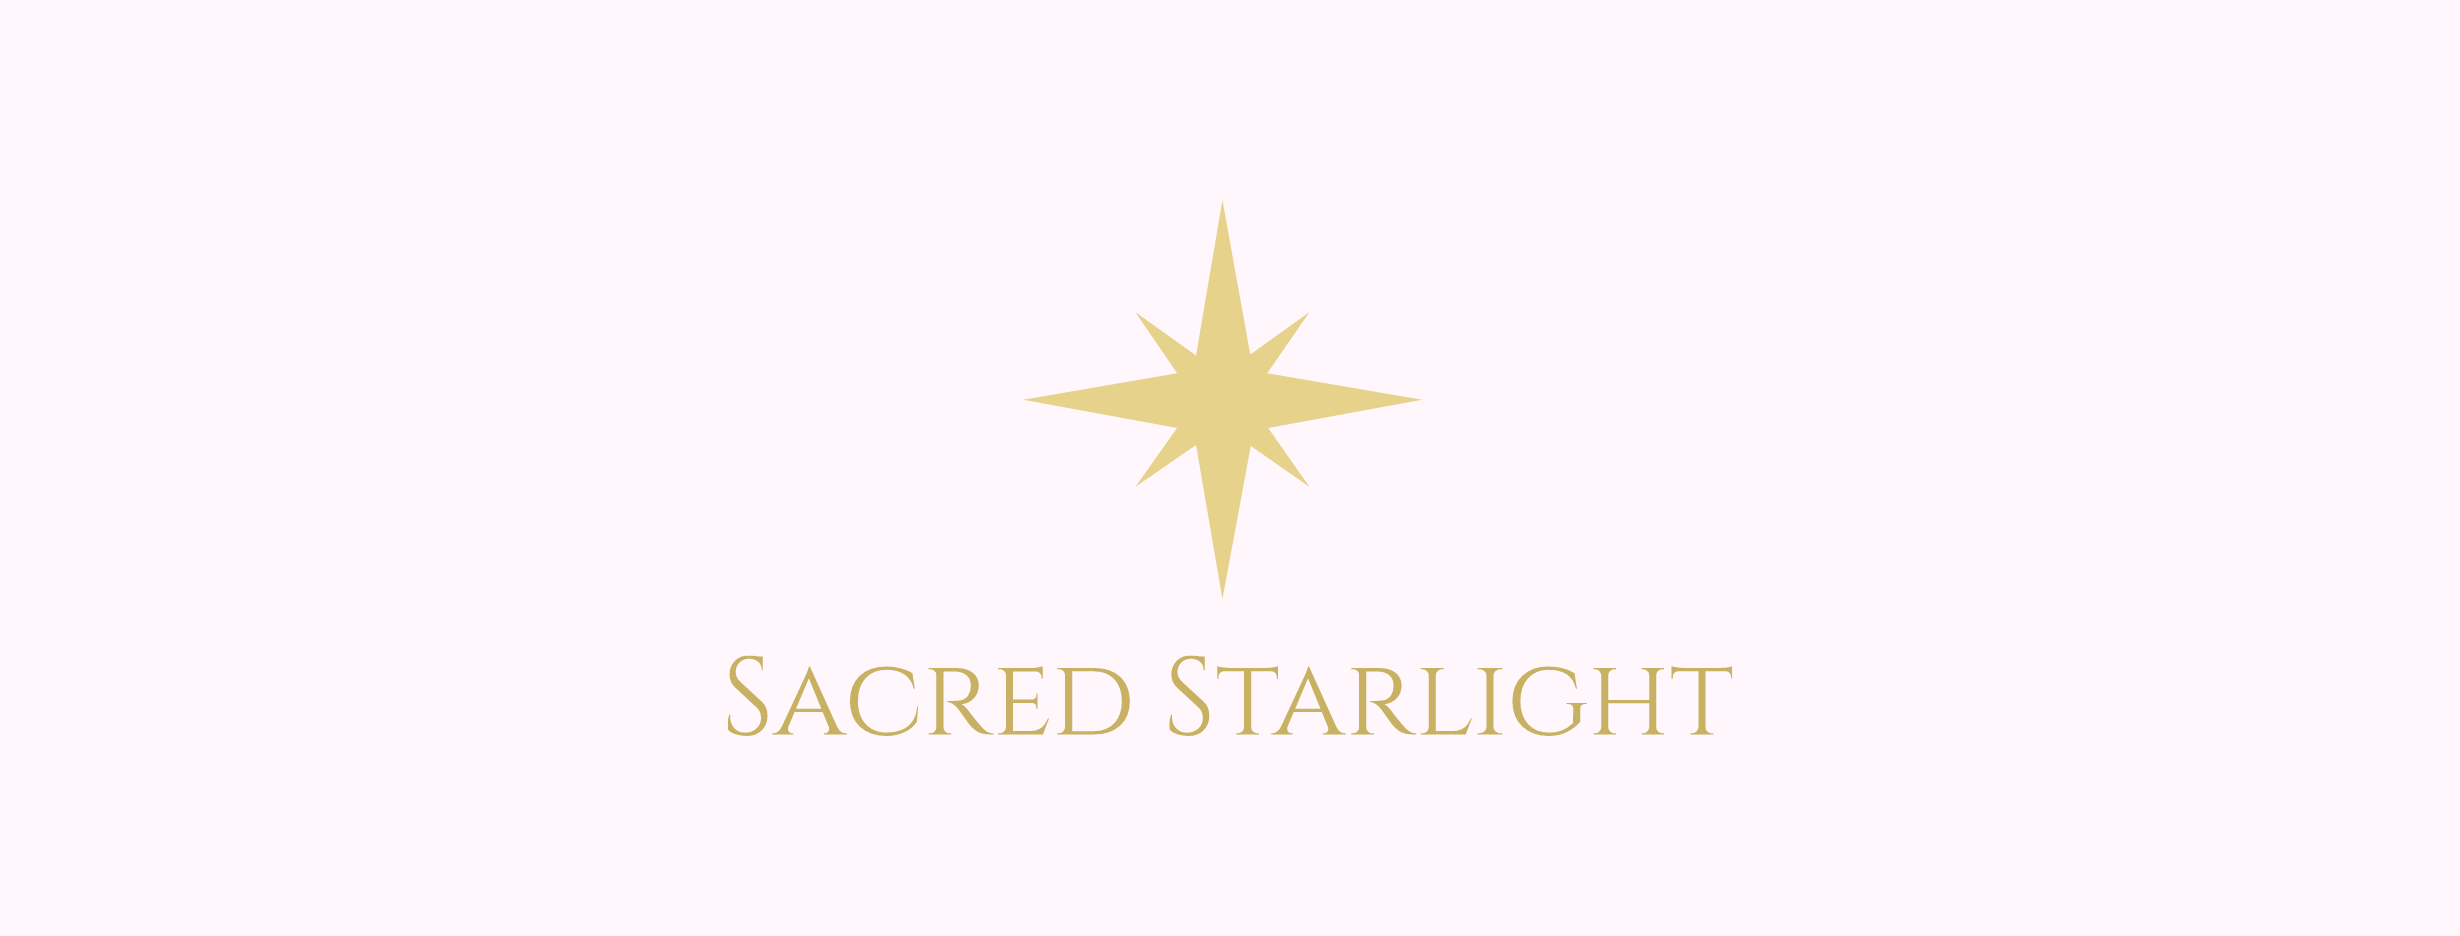 Sacred Starlight Spiritual Podcast: Astrology, Magick, Metaphysics & Grace